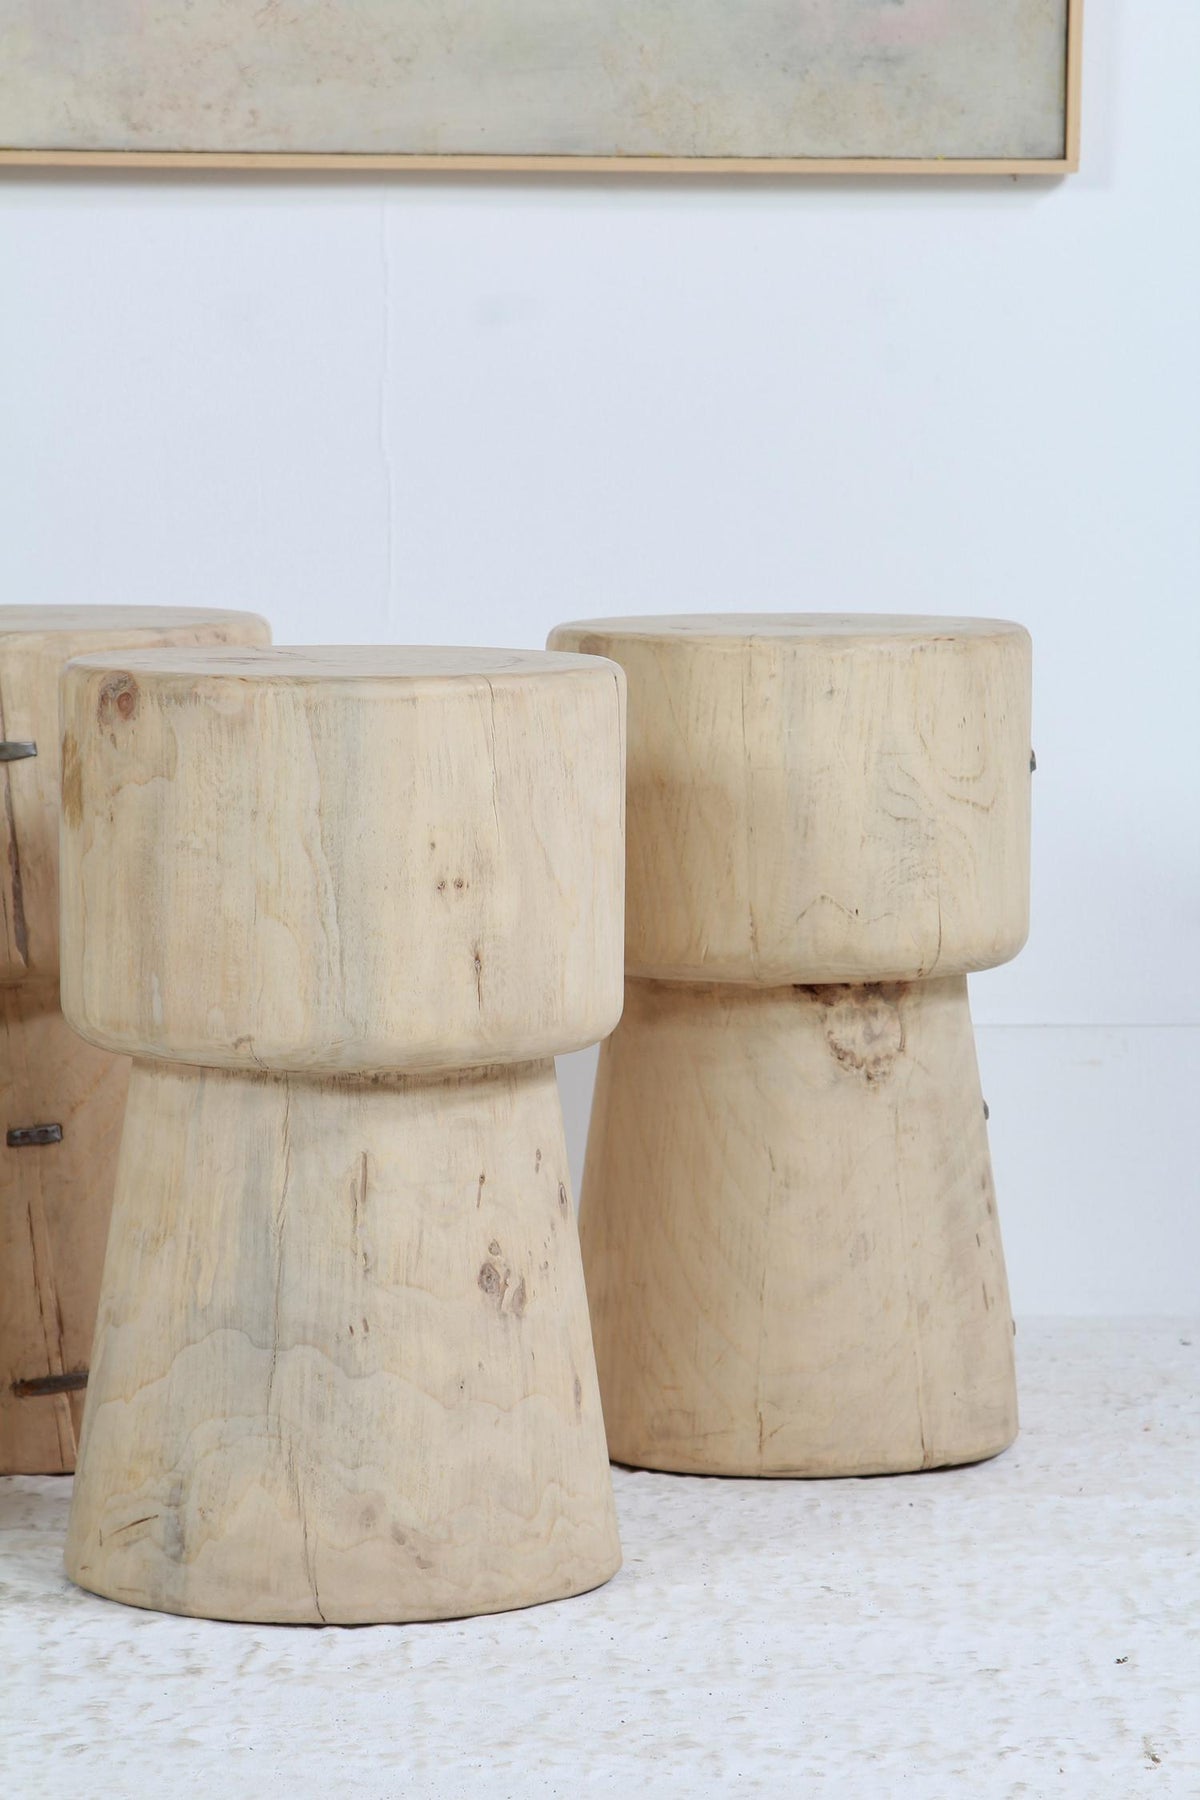 Charming Collection of Five Elmwood Wabi Sabi  Drum Table/Stools